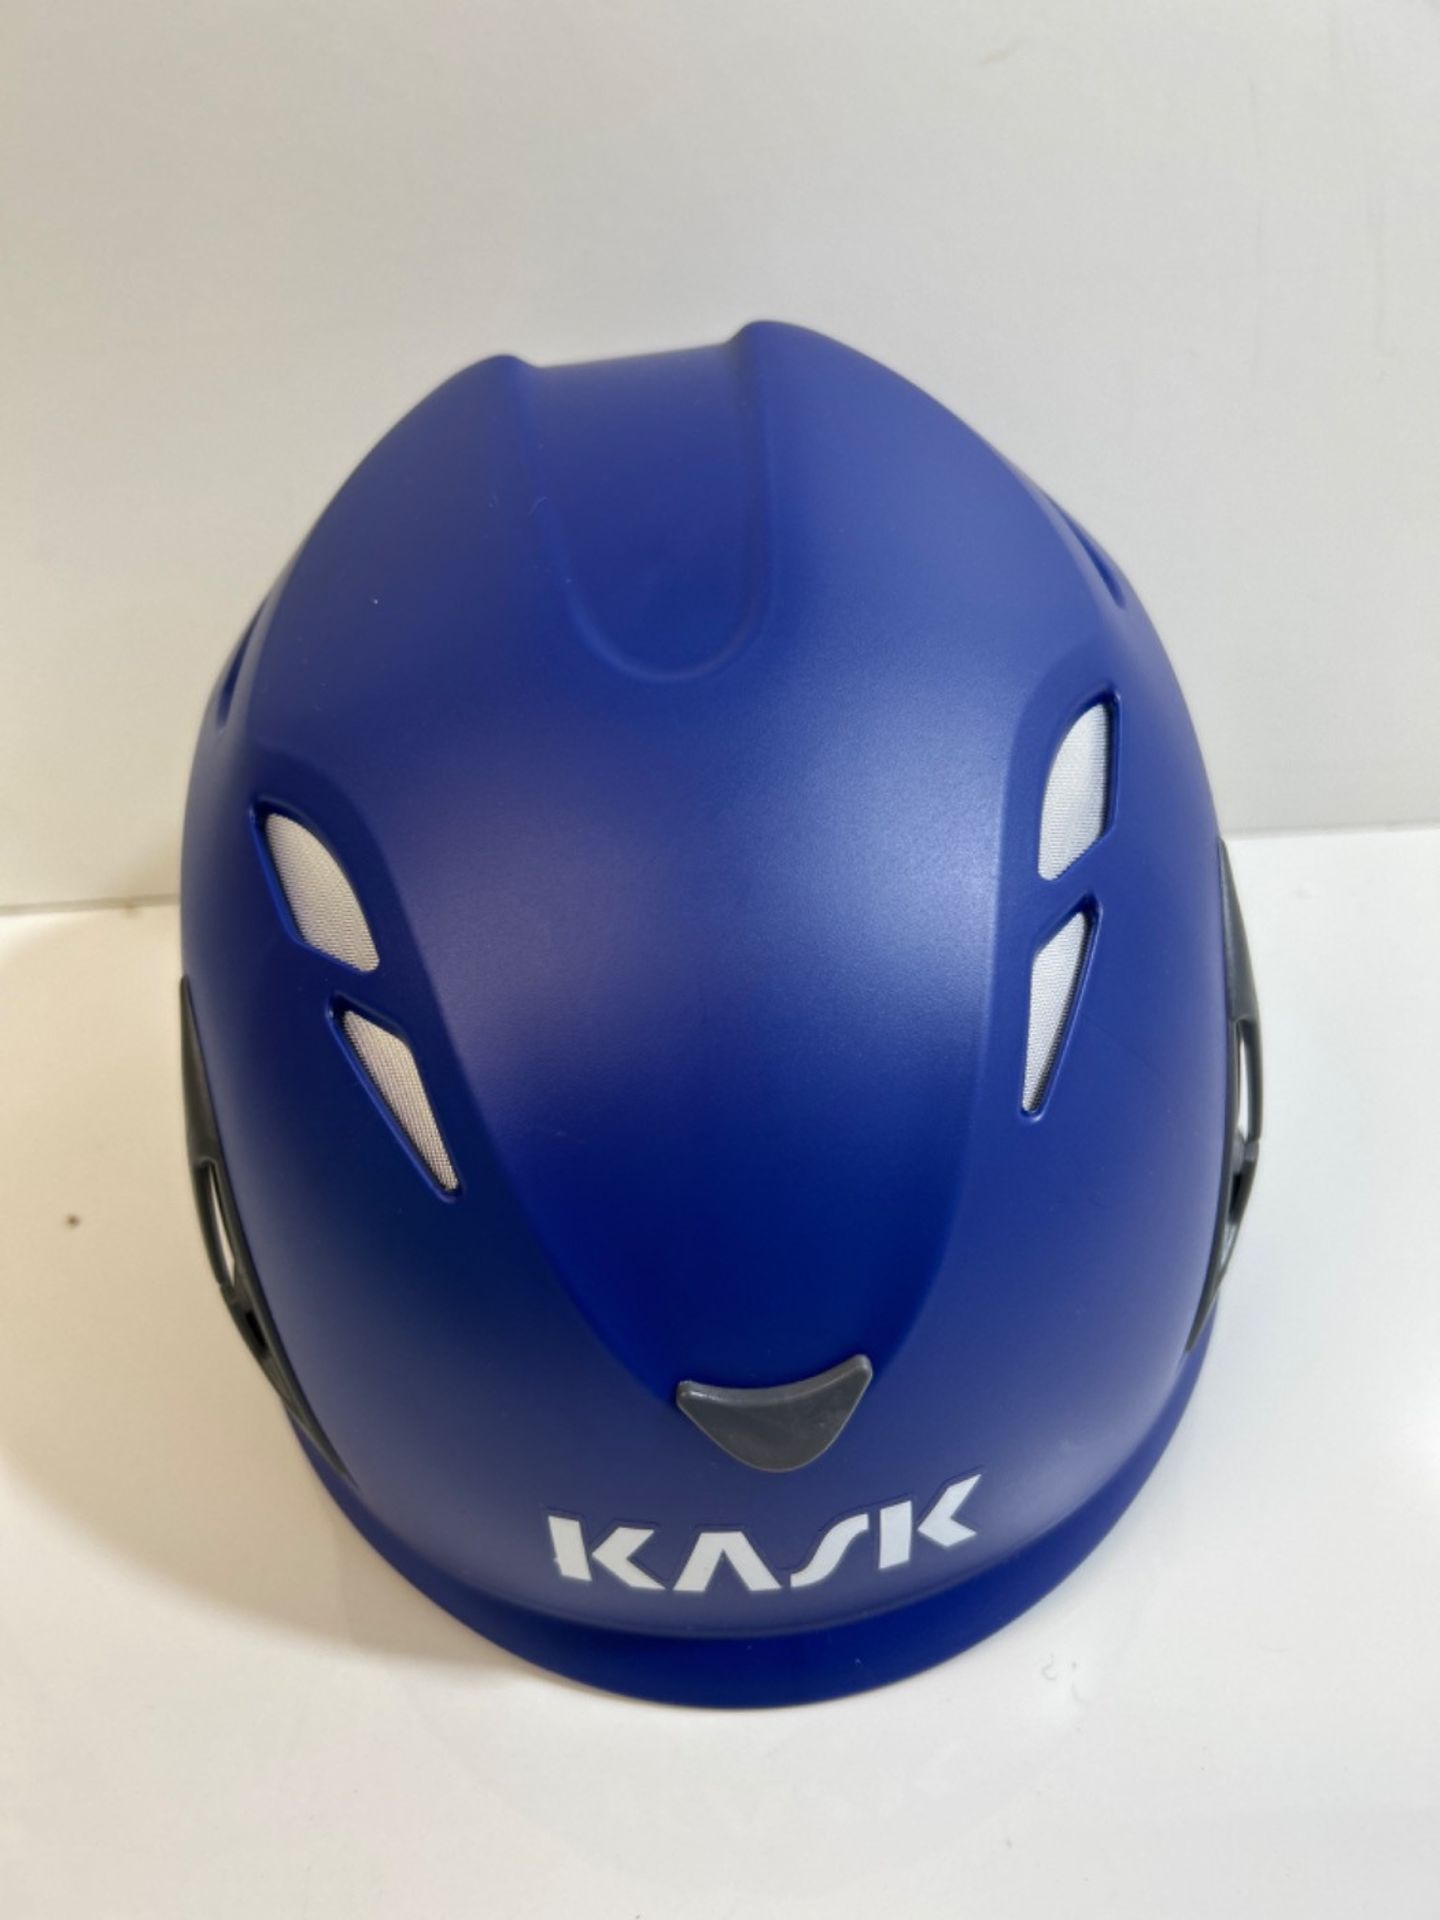 Kask WHE00008-208 Size 51-63 cm "Plasma AQ" Helmet - Dark Blue - Image 2 of 3